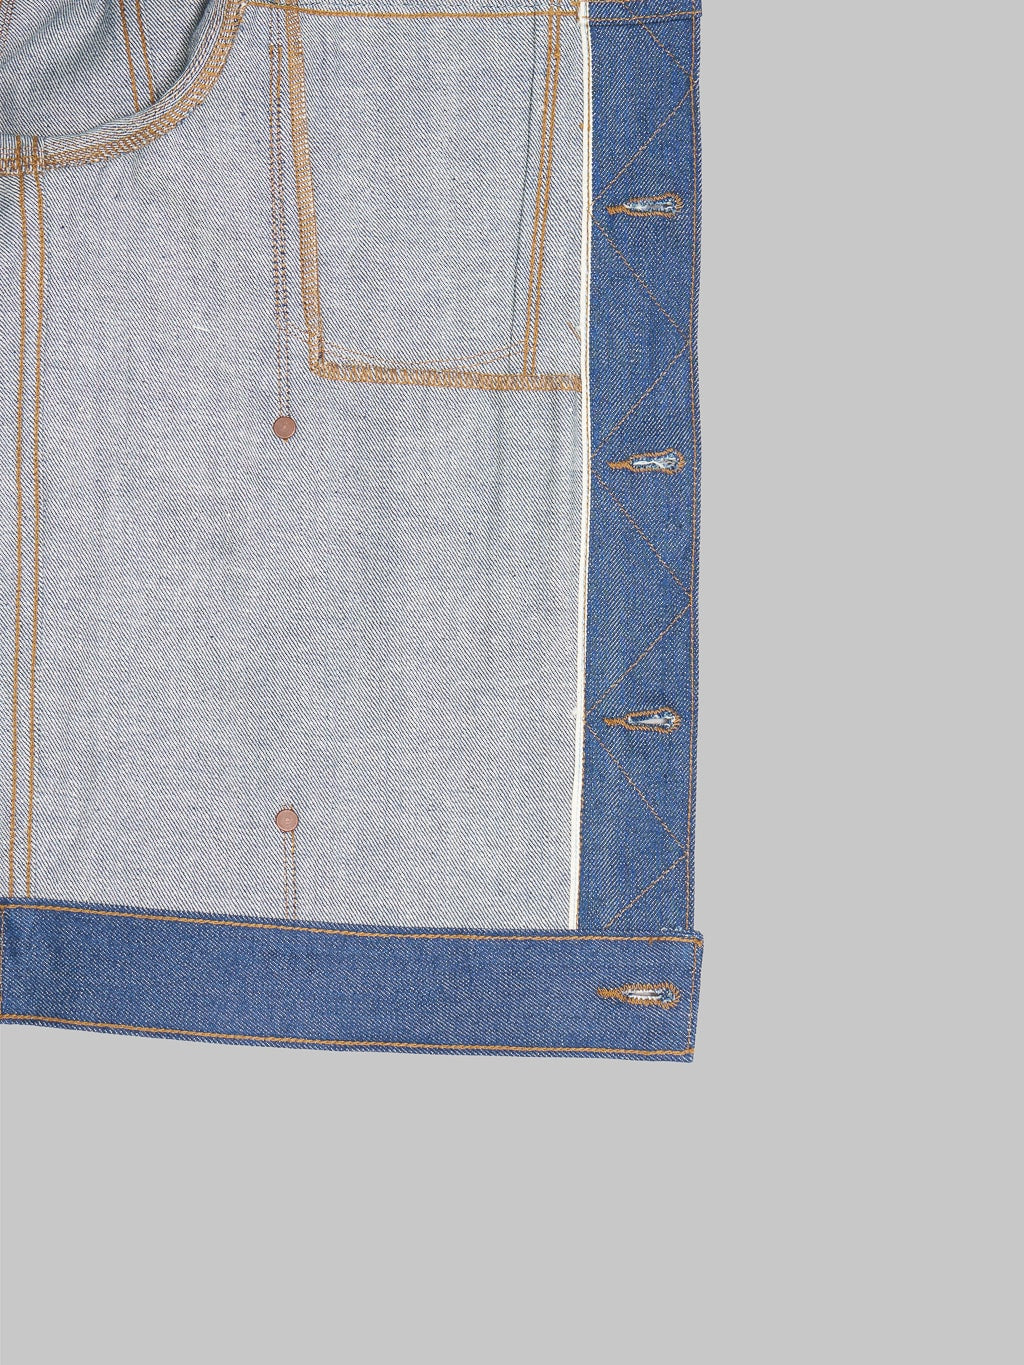 freenote cloth classic denim jacket vintage blue denim fabric interior